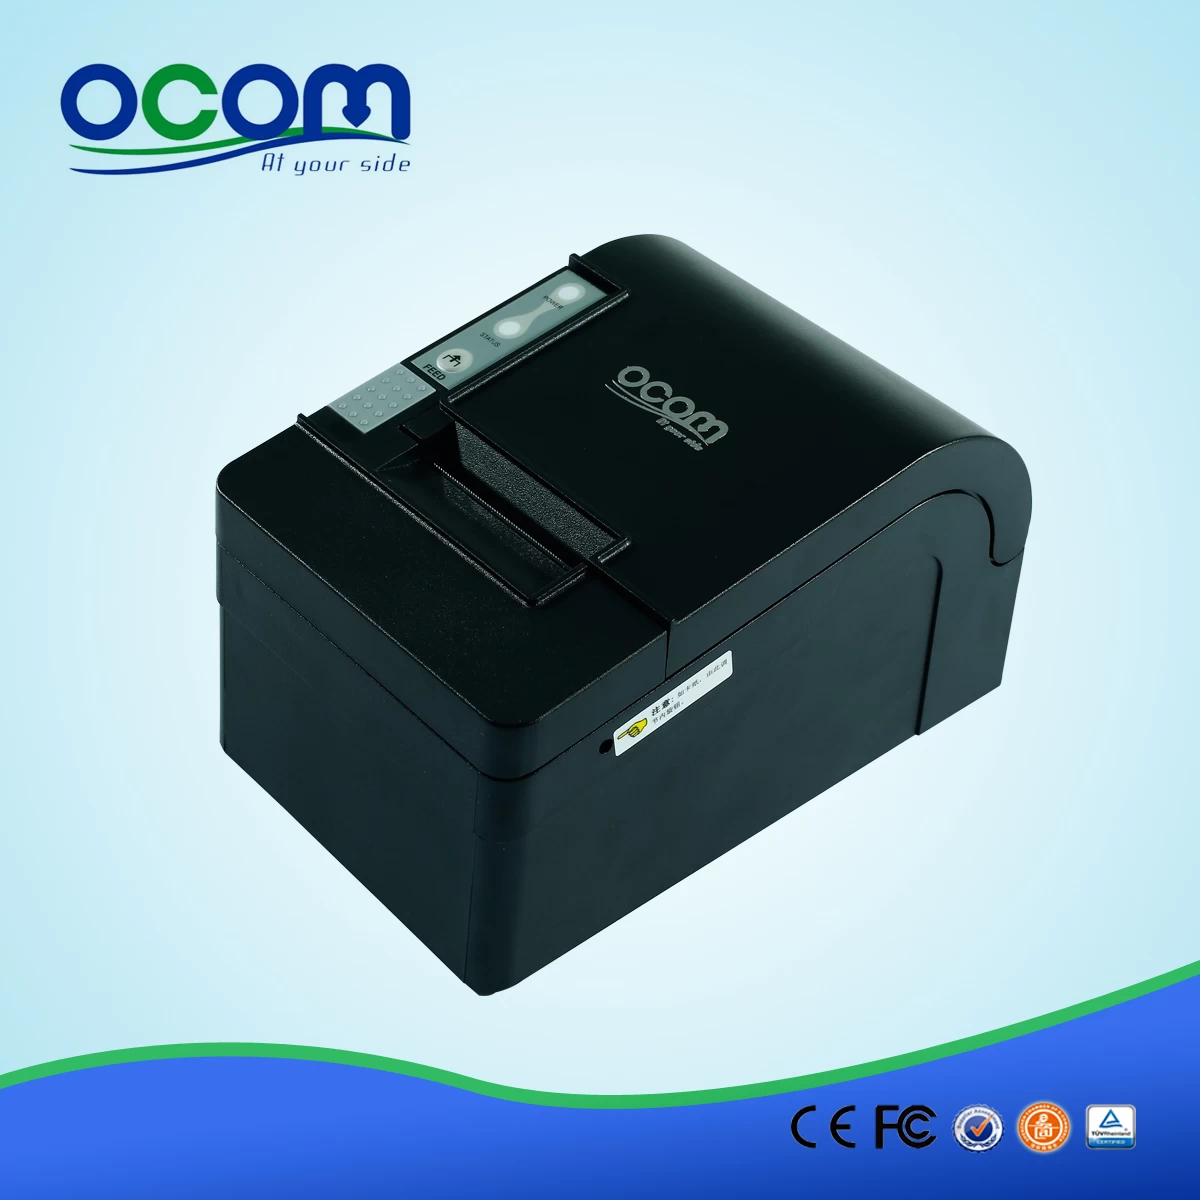 (OCPP-58C) 58mm Auto-cutter Bluetooth Thermal Receipt Printer